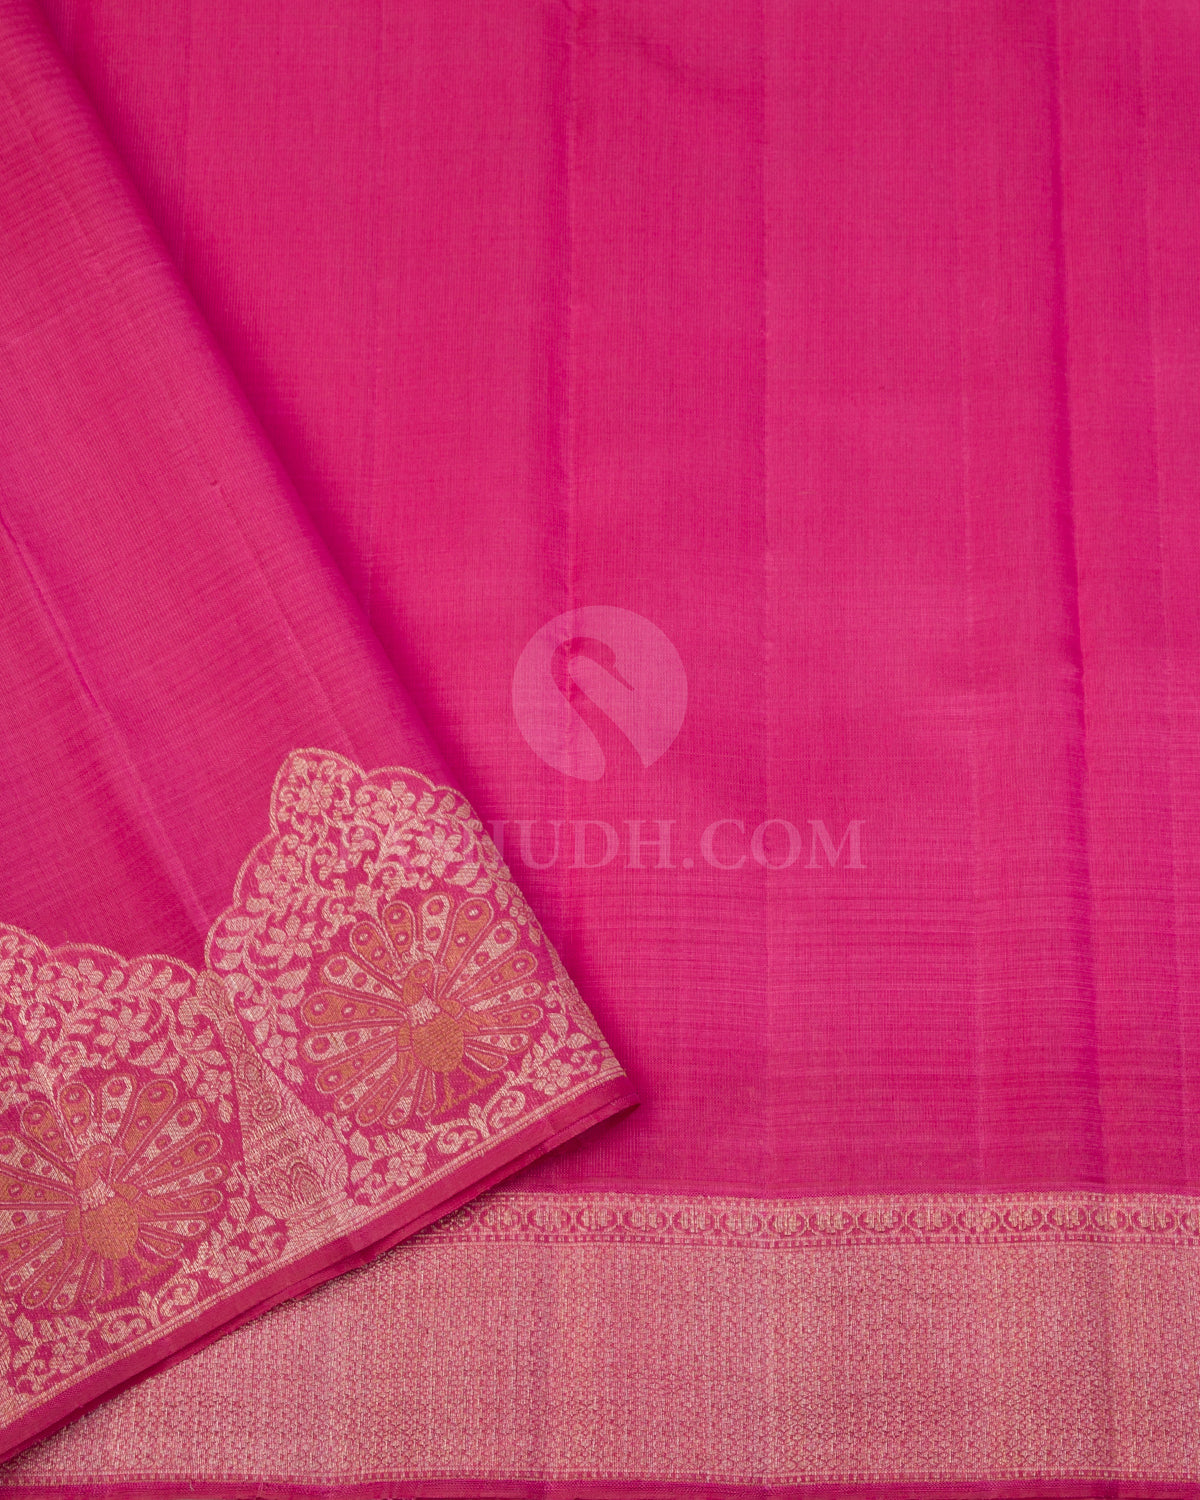 Gold & Pink Kanjivaram Silk Saree - S968 - View 3